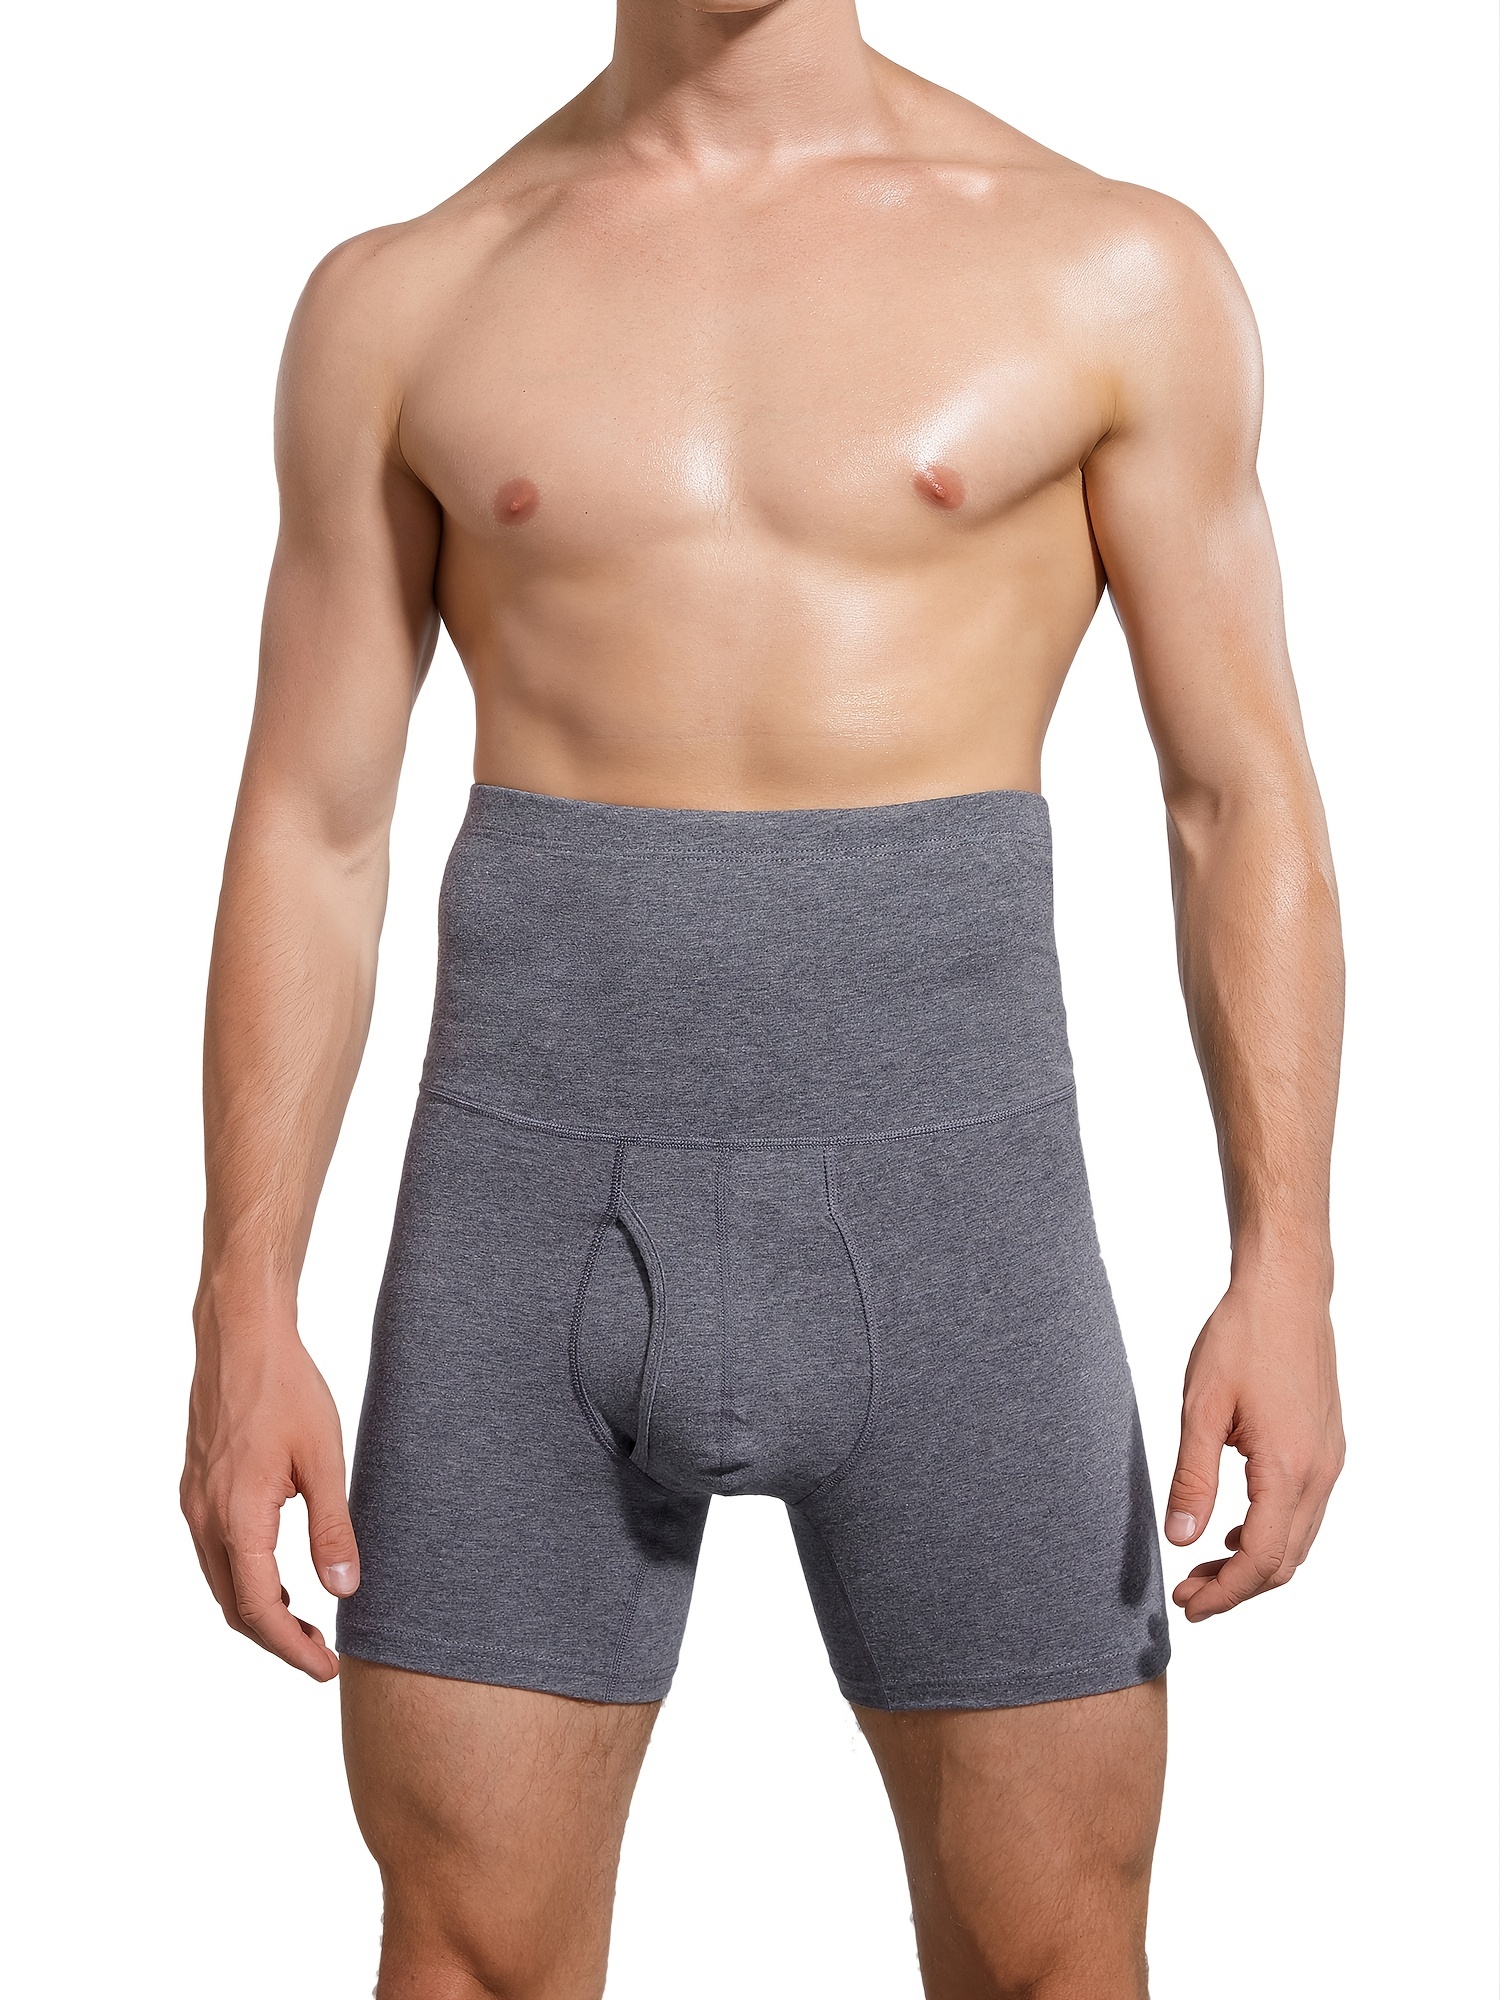 Men 4pcs Pads Tummy Control Shorts Low Waist Slimming Underwear